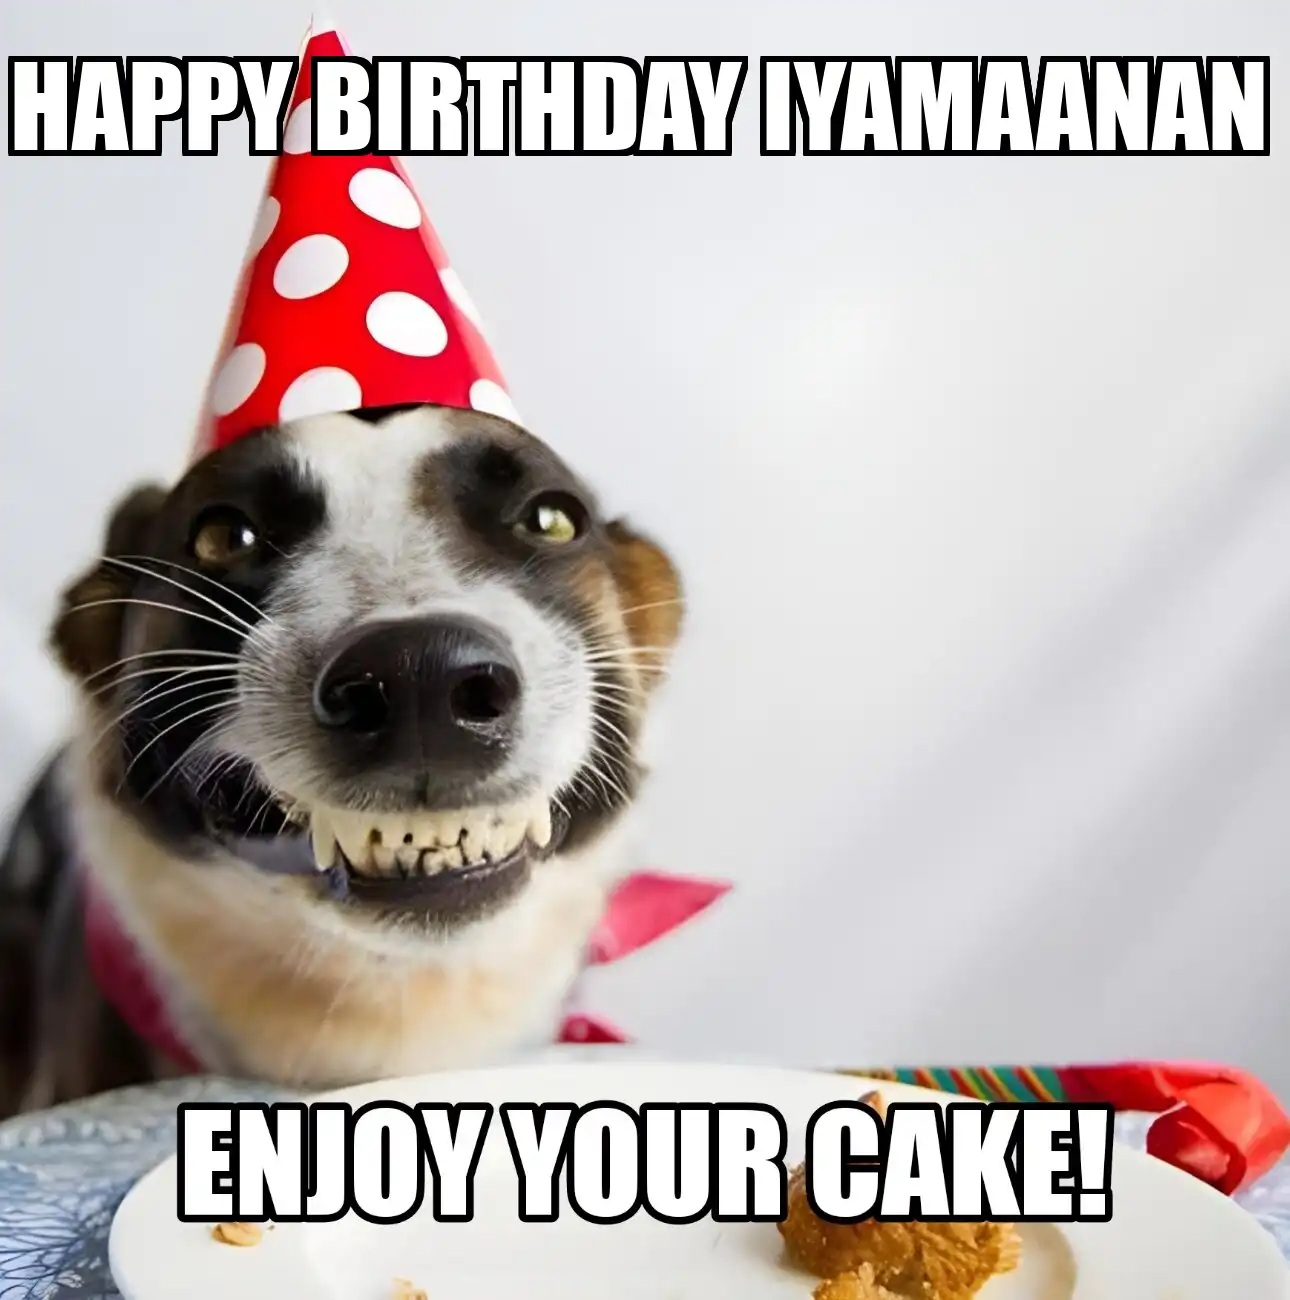 Happy Birthday Iyamaanan Enjoy Your Cake Dog Meme